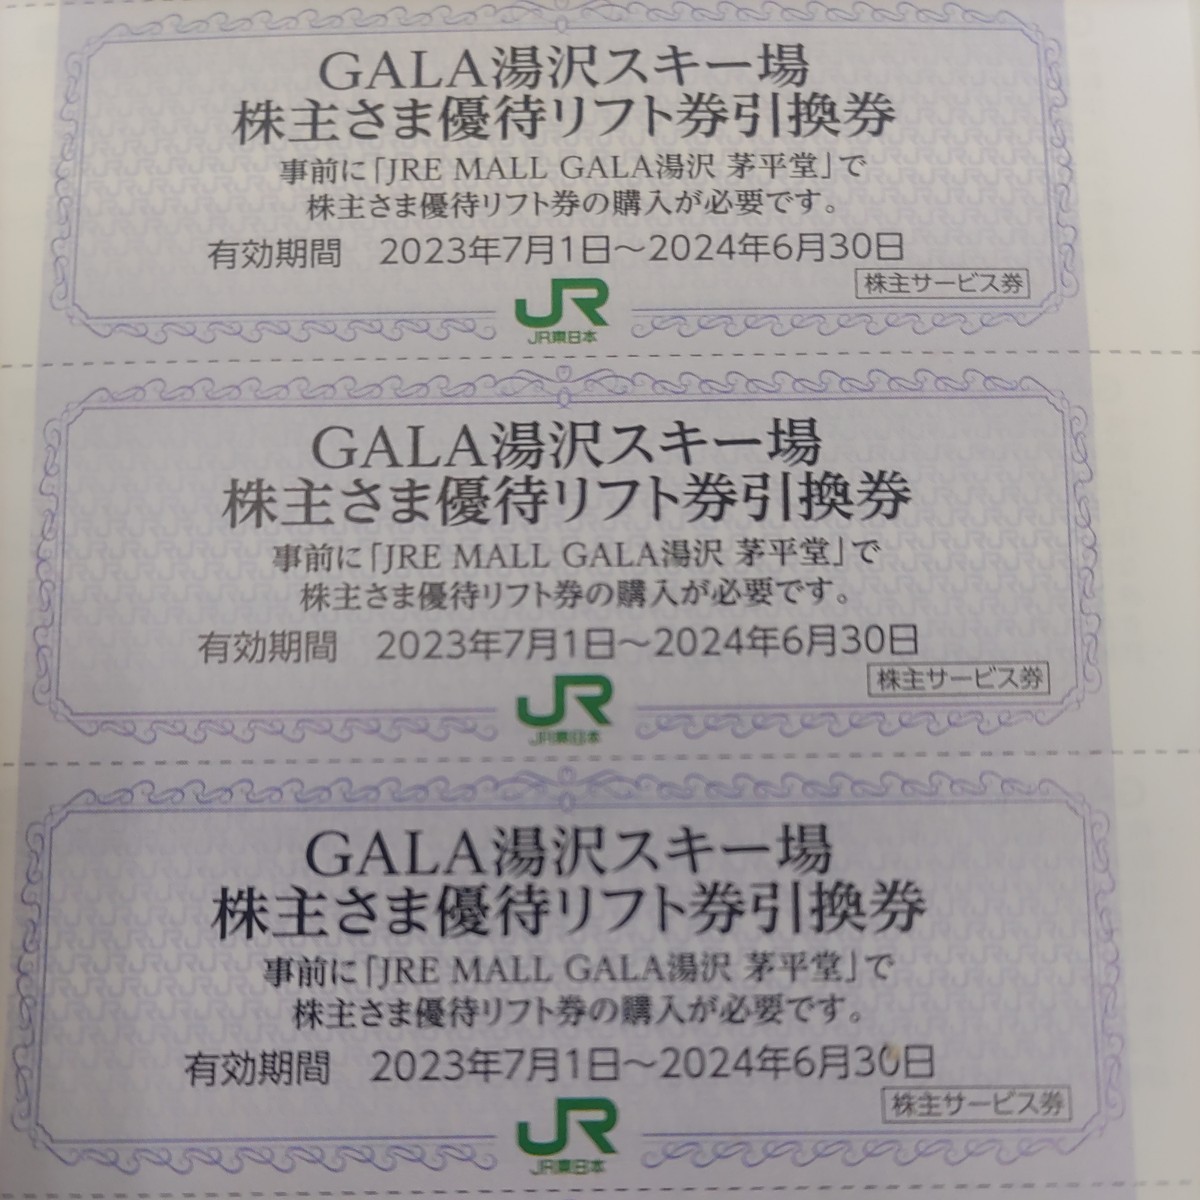 JR東日本優待券 ガーラ 湯沢 スキー場リフト20%割引券1名様、普通郵便送料込み80円（その他人数分も出品しております）1枚の出品です。_画像1